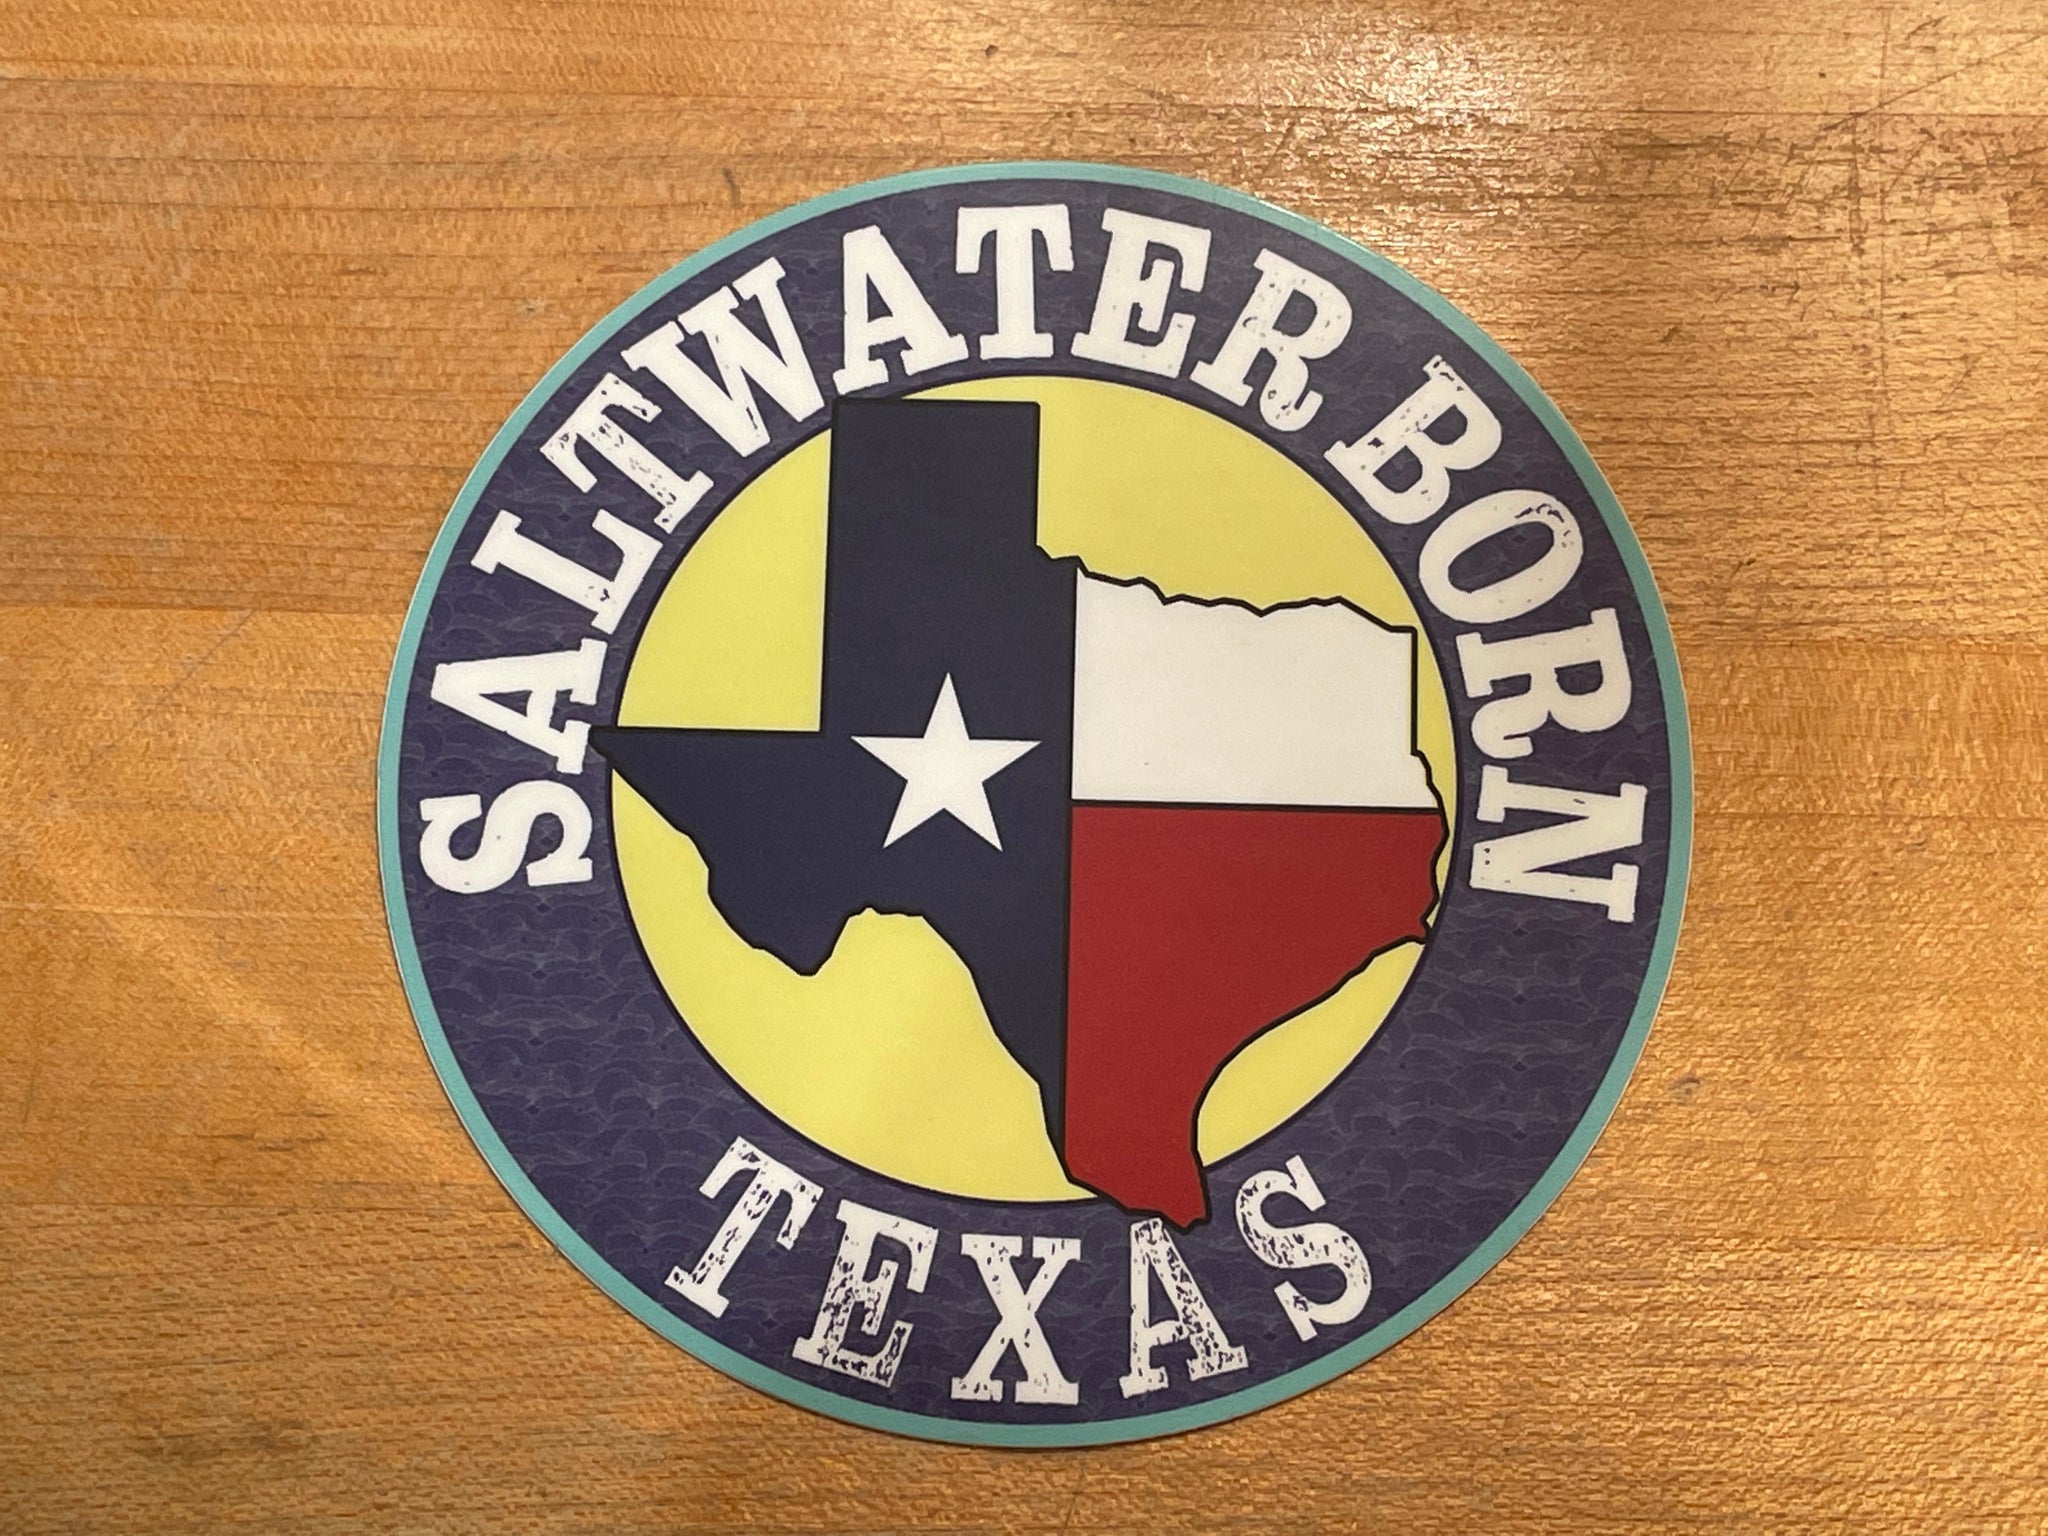 Saltwater Born State of Texas Sticker